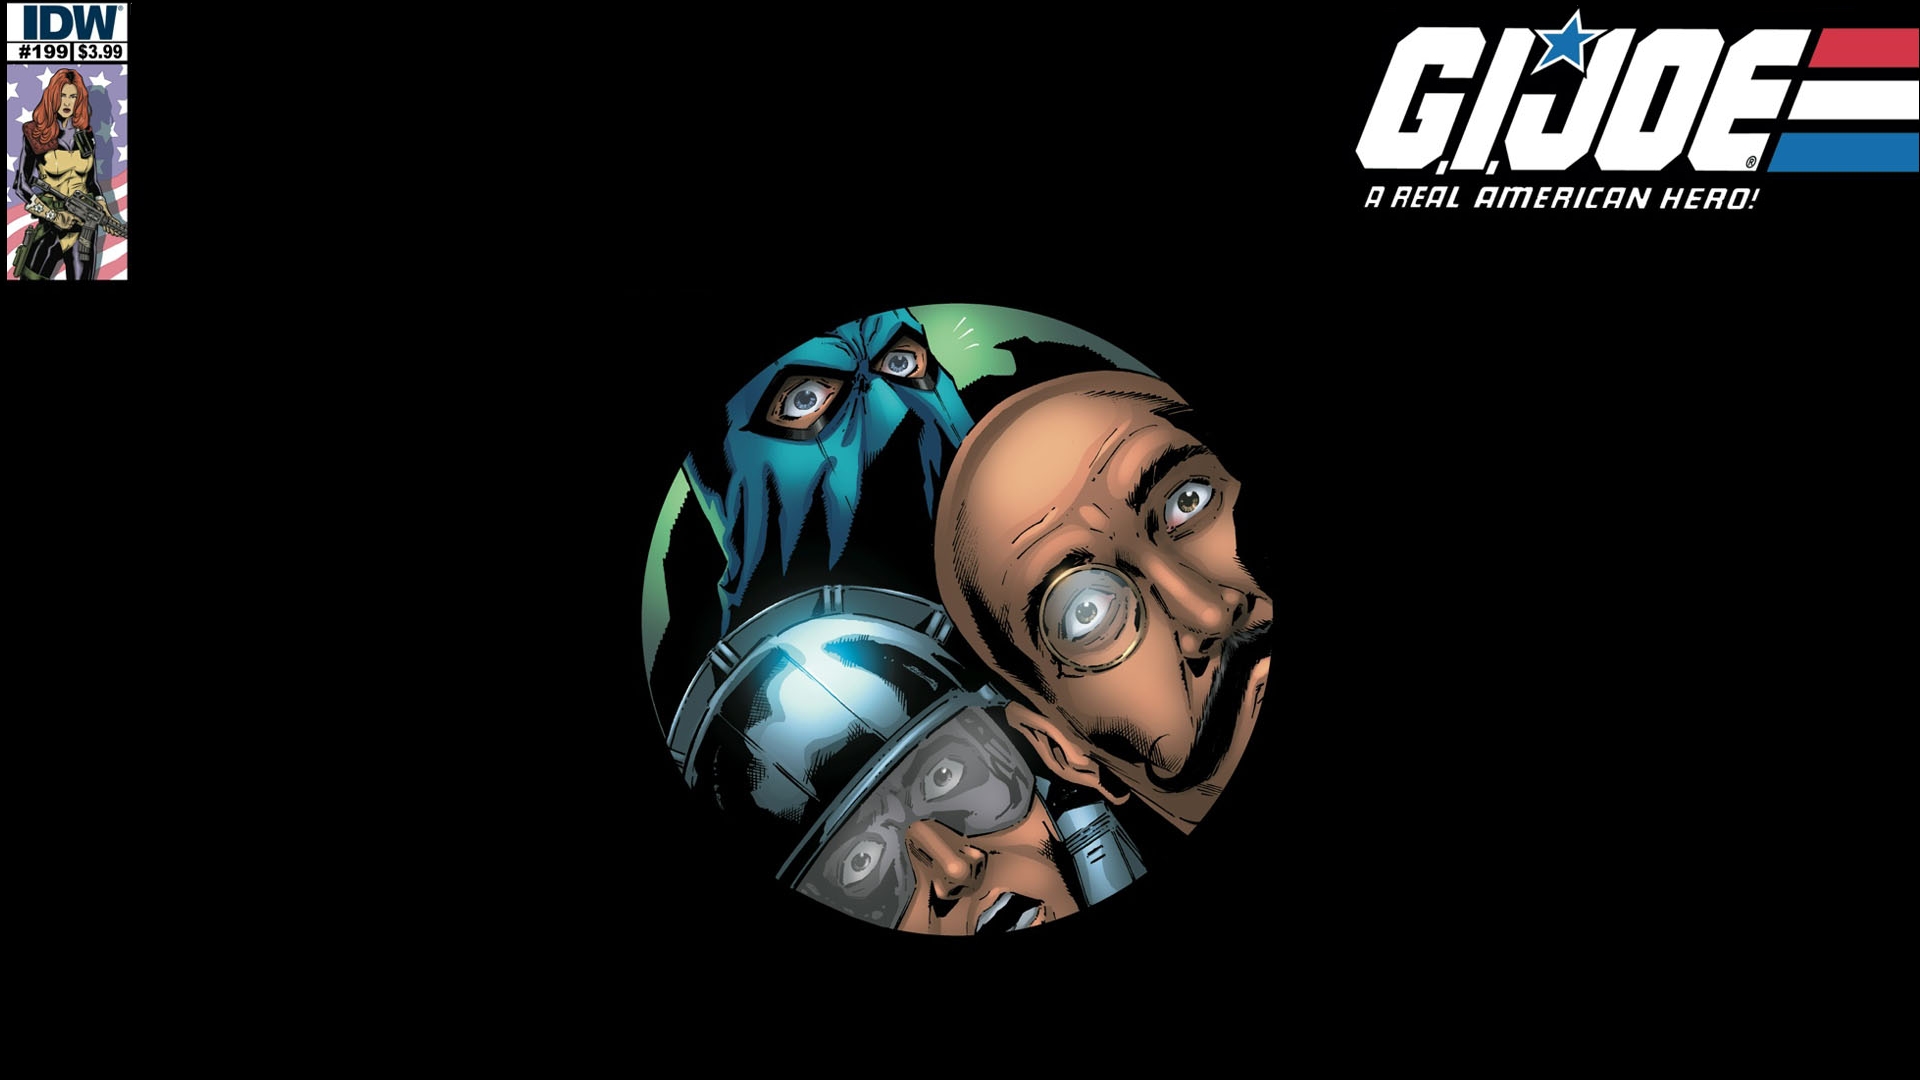 639005 Bild herunterladen comics, g i joe: a real american hero, gi jo - Hintergrundbilder und Bildschirmschoner kostenlos